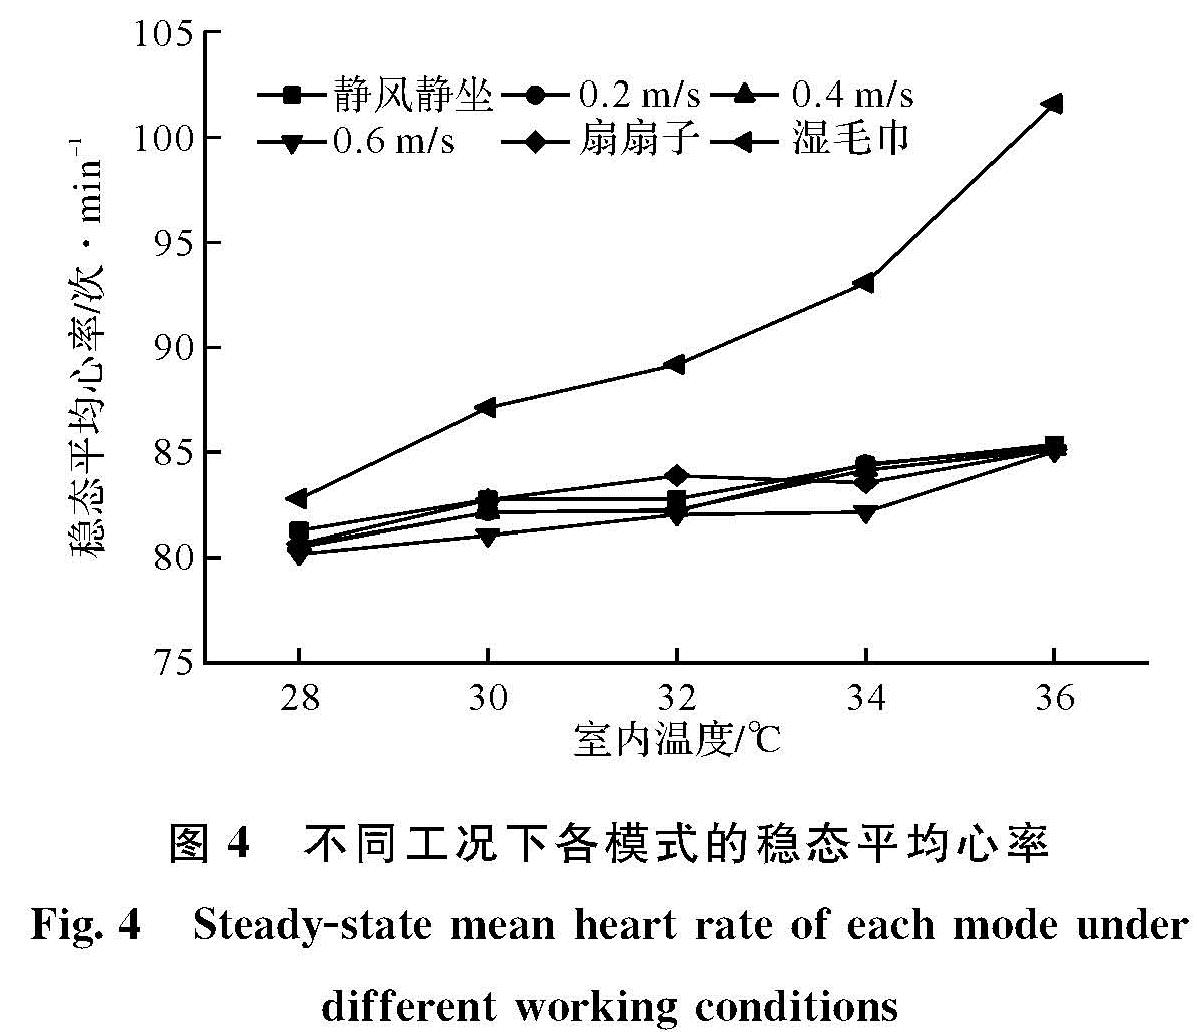 图4 不同工况下各模式的稳态平均心率<br/>Fig.4 Steady-state mean heart rate of each mode under different working conditions